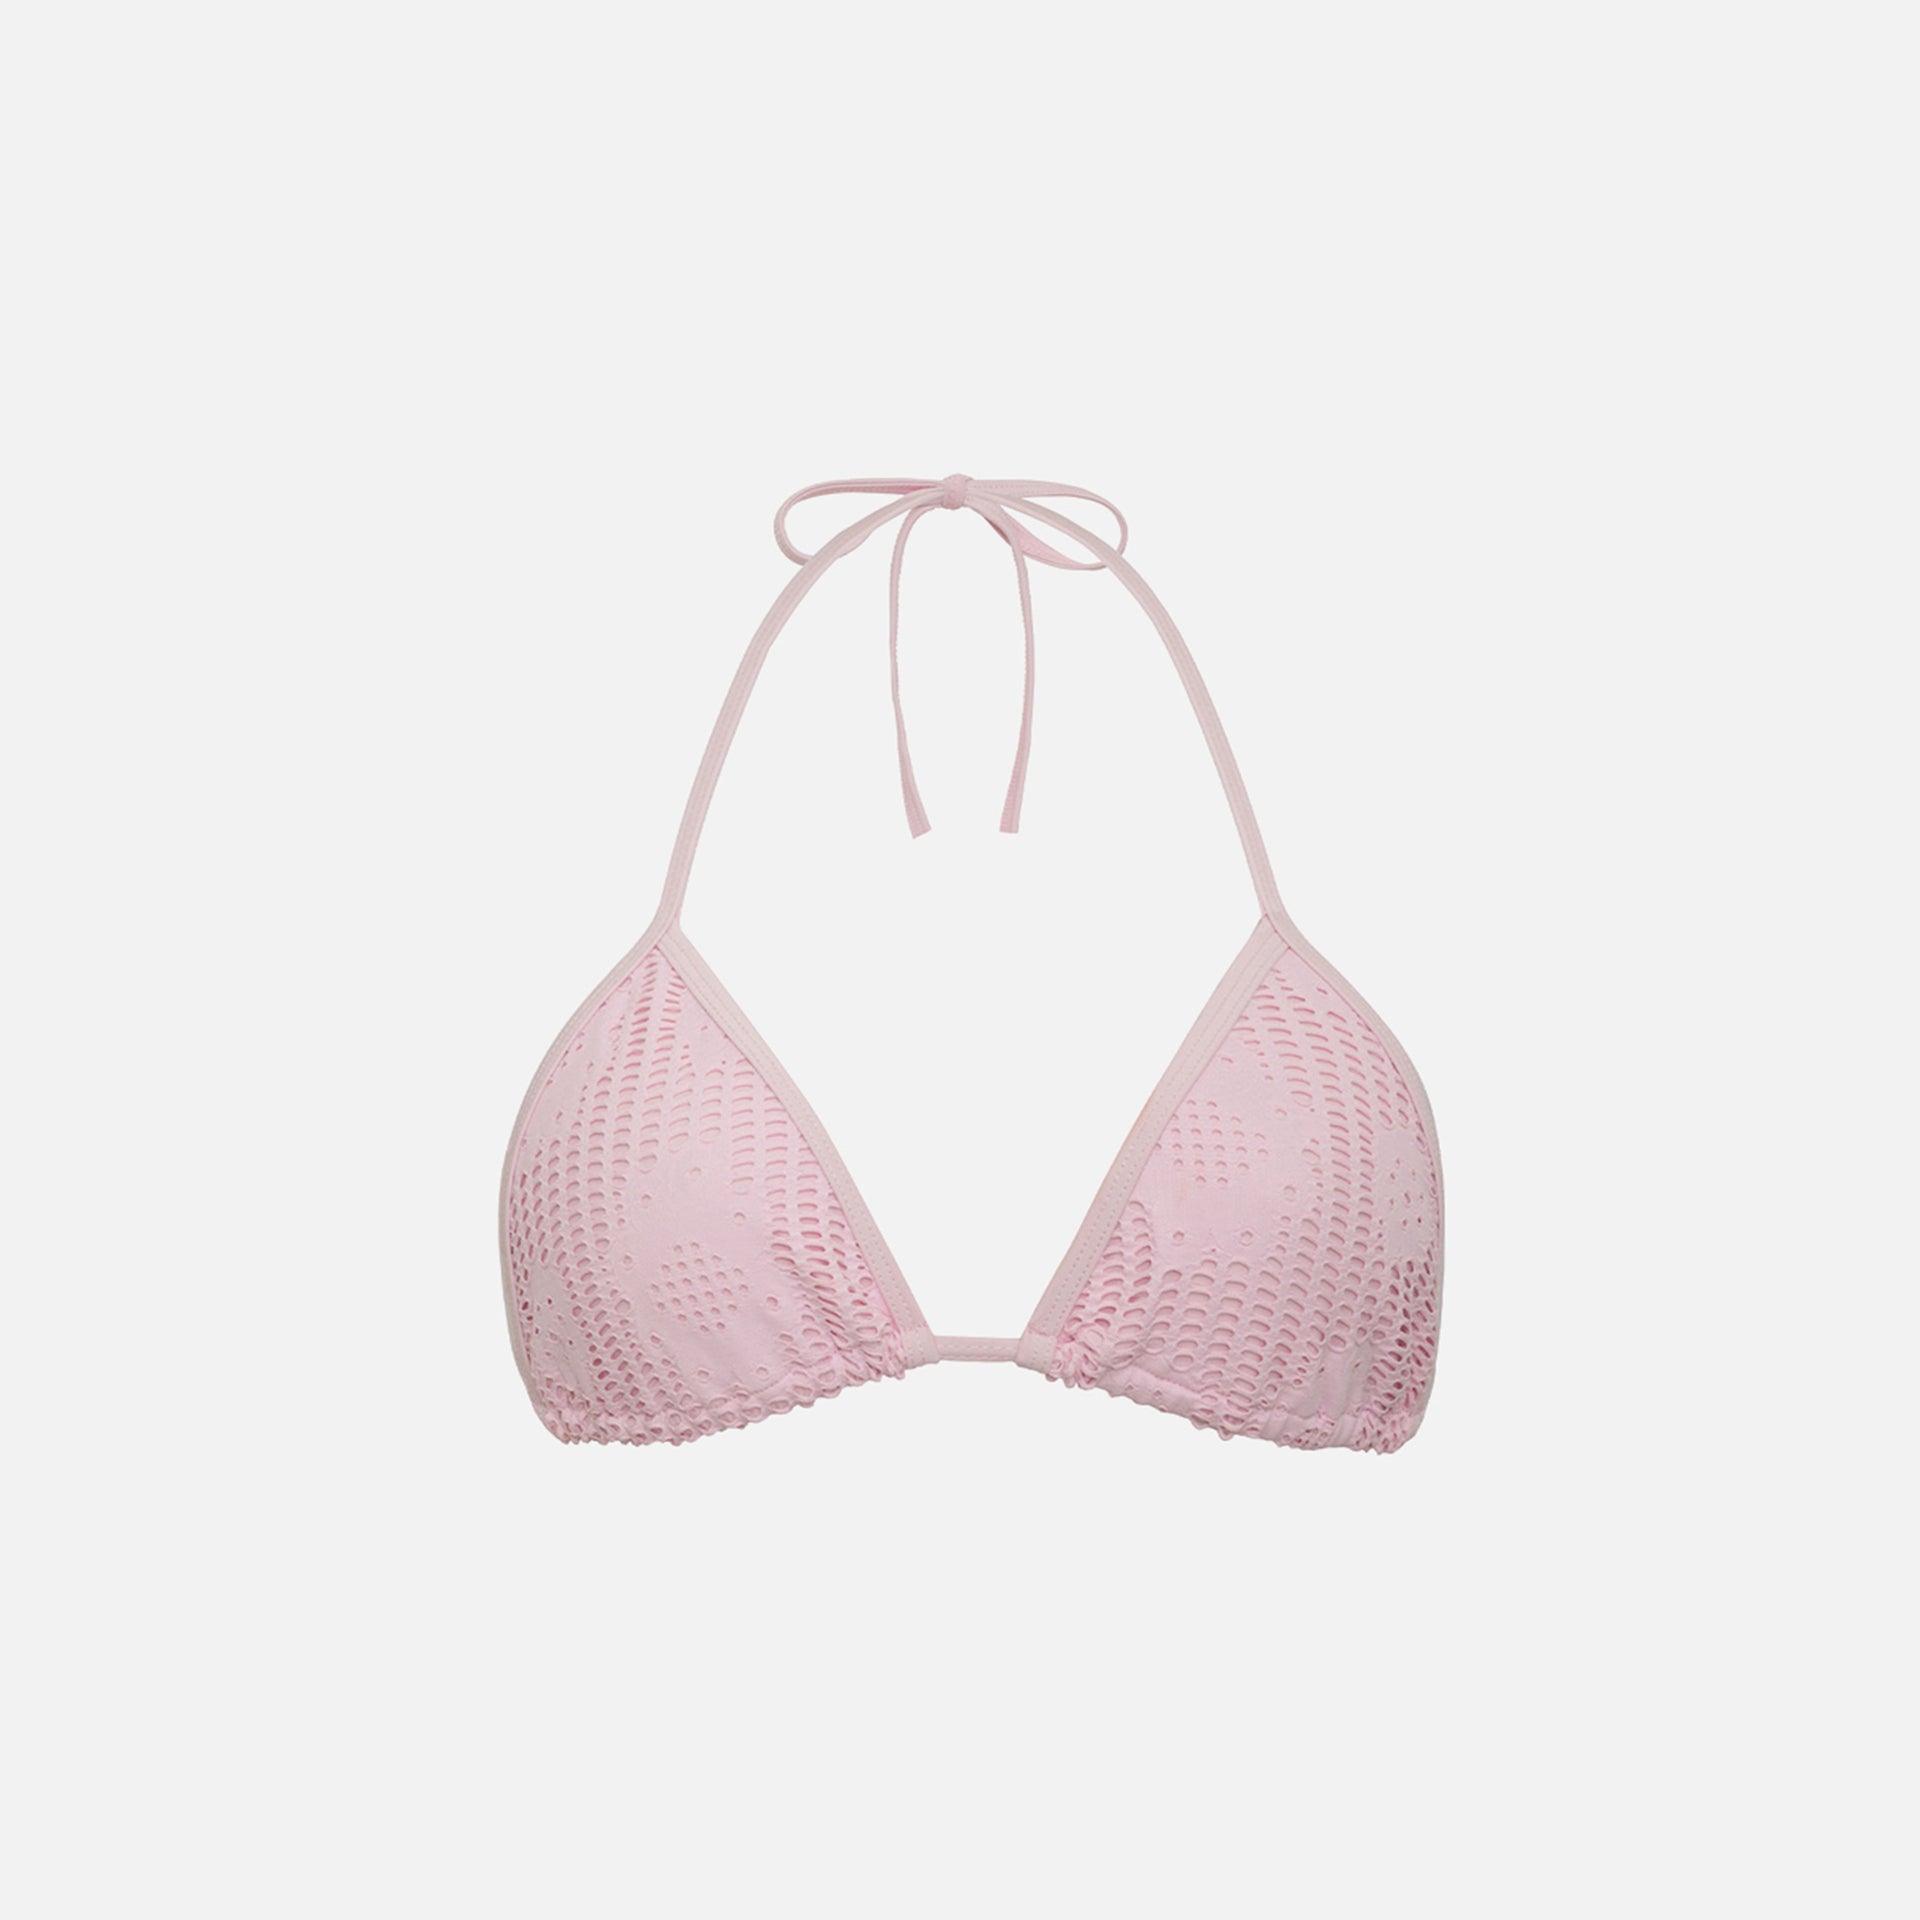 Frankies Bikinis x Pamela Anderson Zeus Floral Jacquard Top - Pink Dream